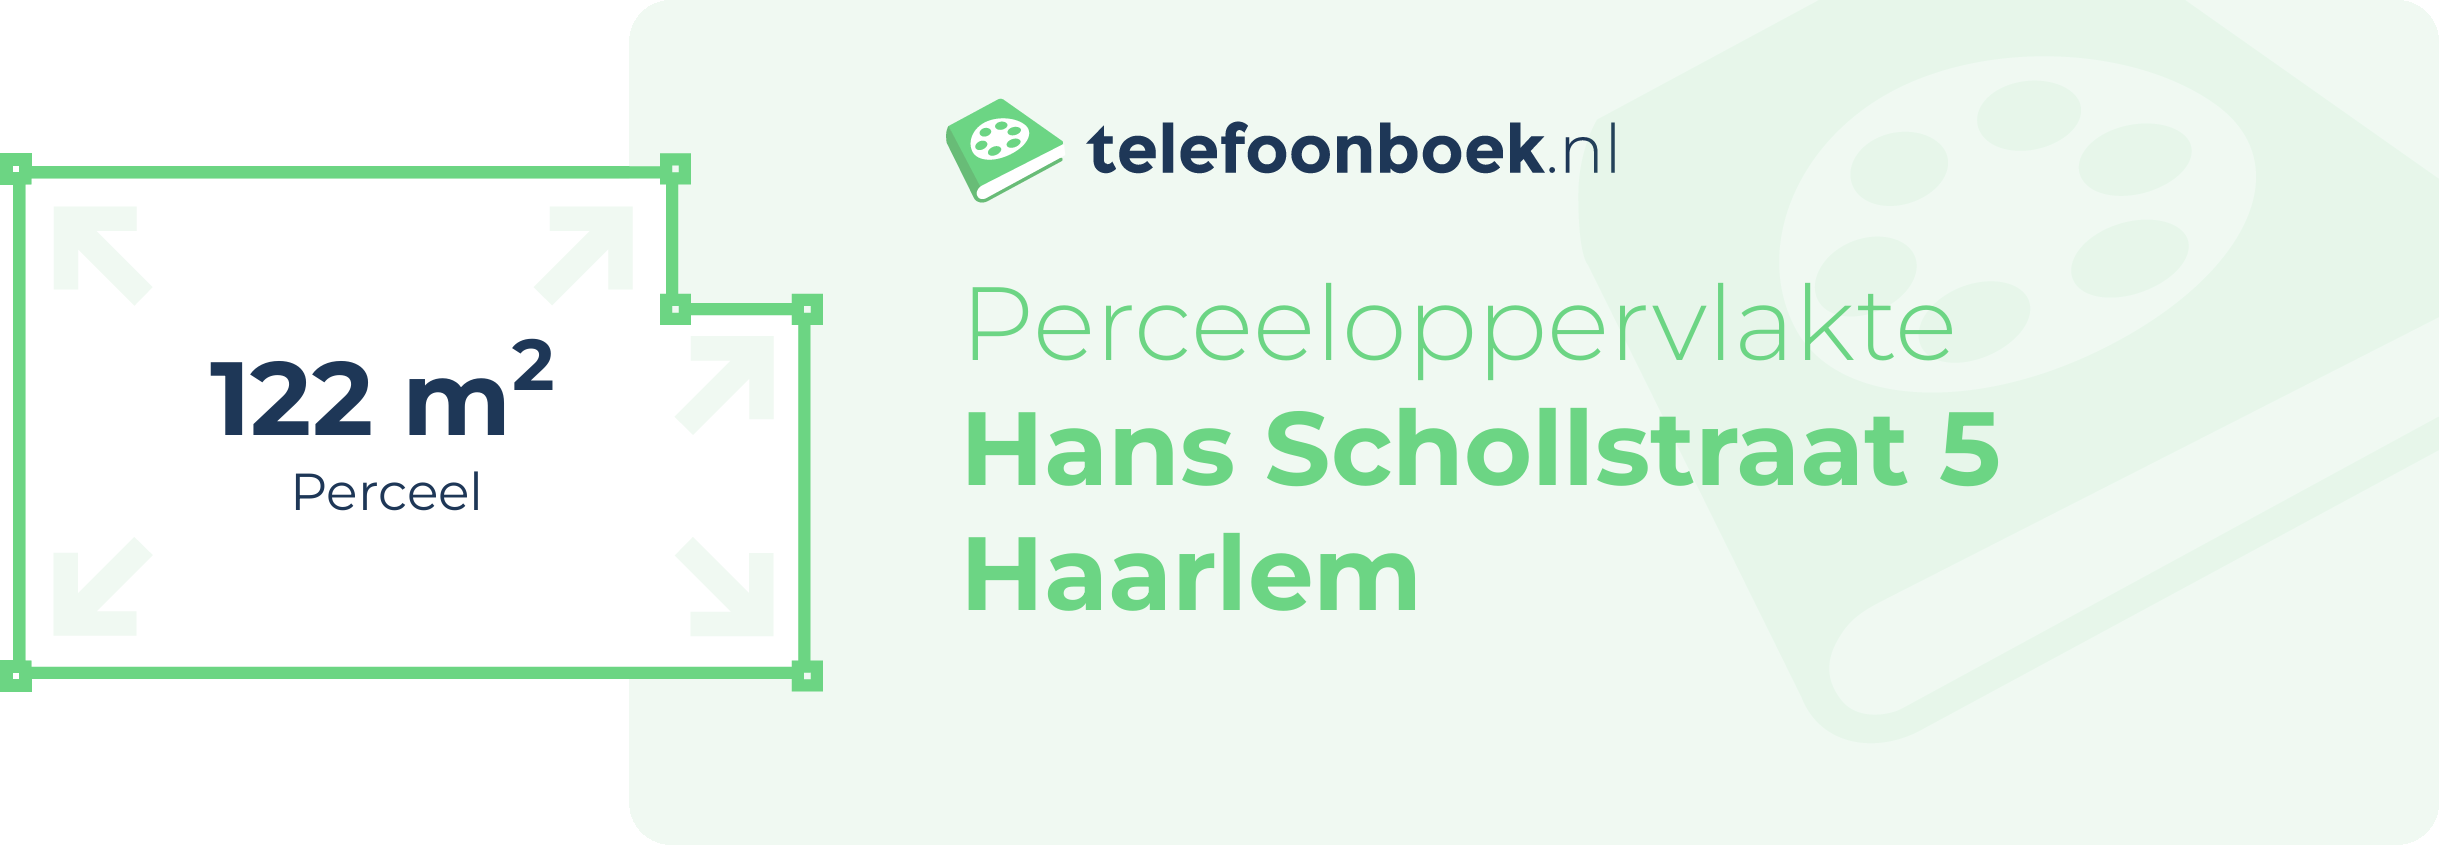 Perceeloppervlakte Hans Schollstraat 5 Haarlem